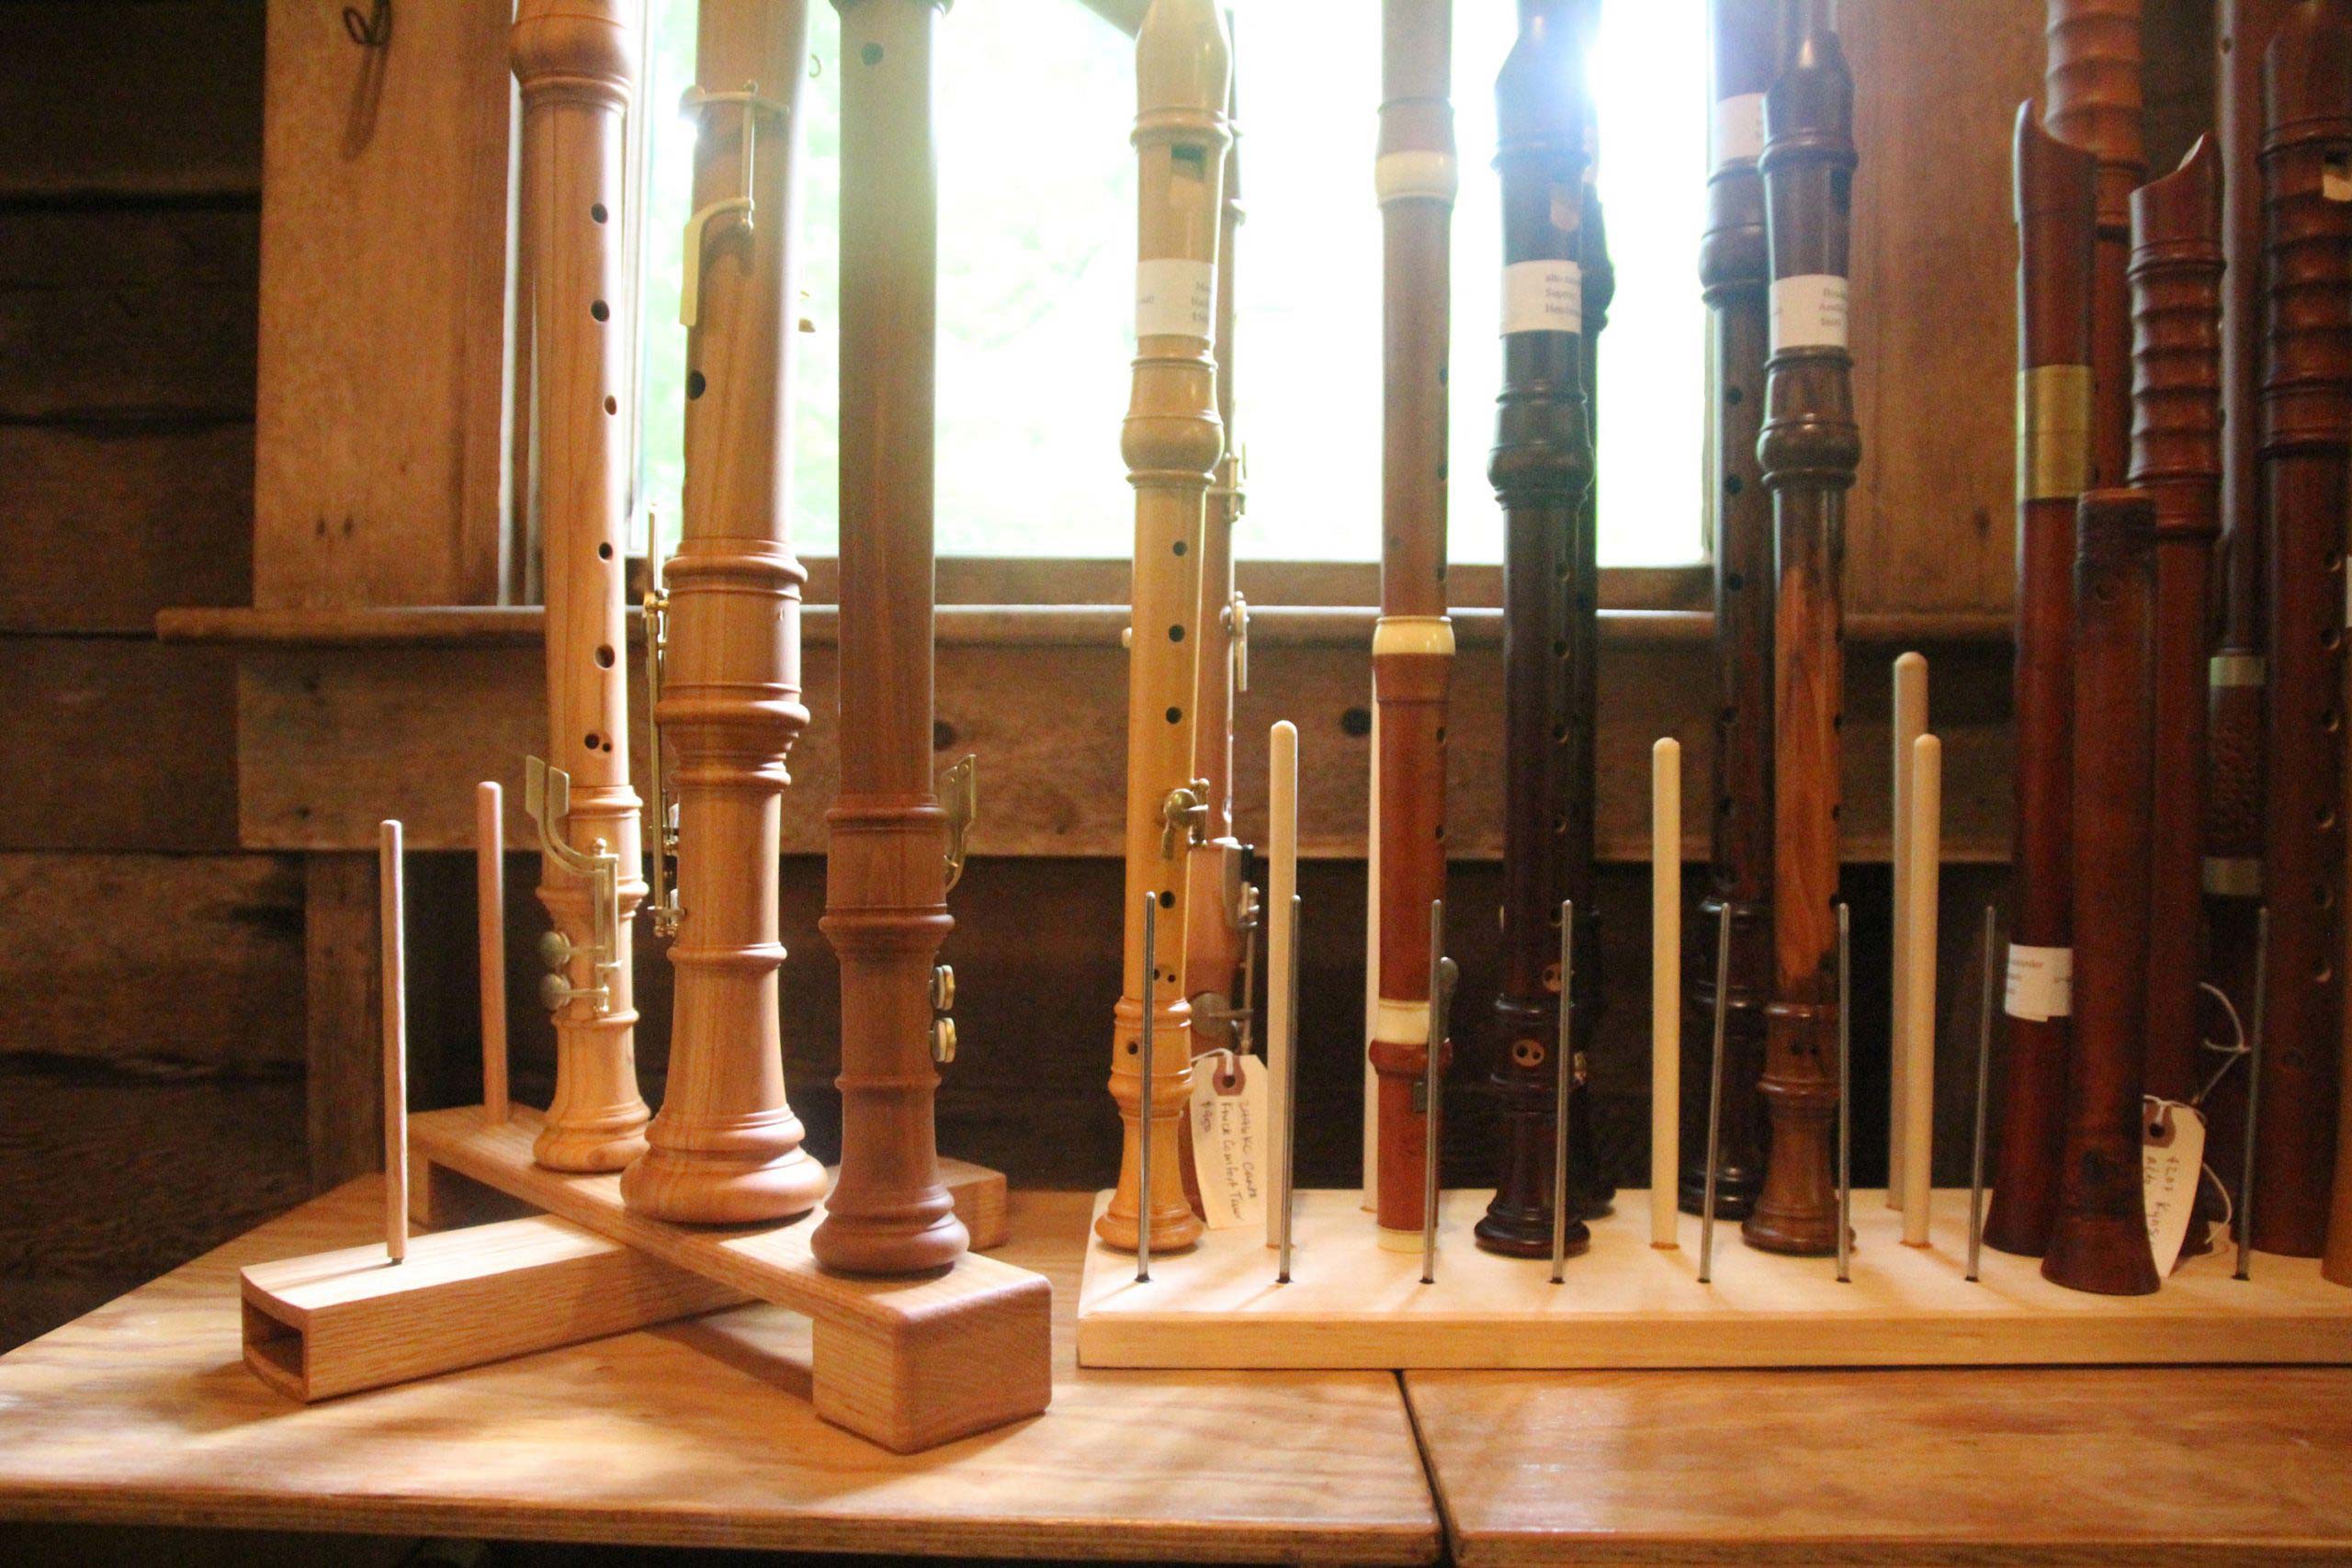 Wooden recorders